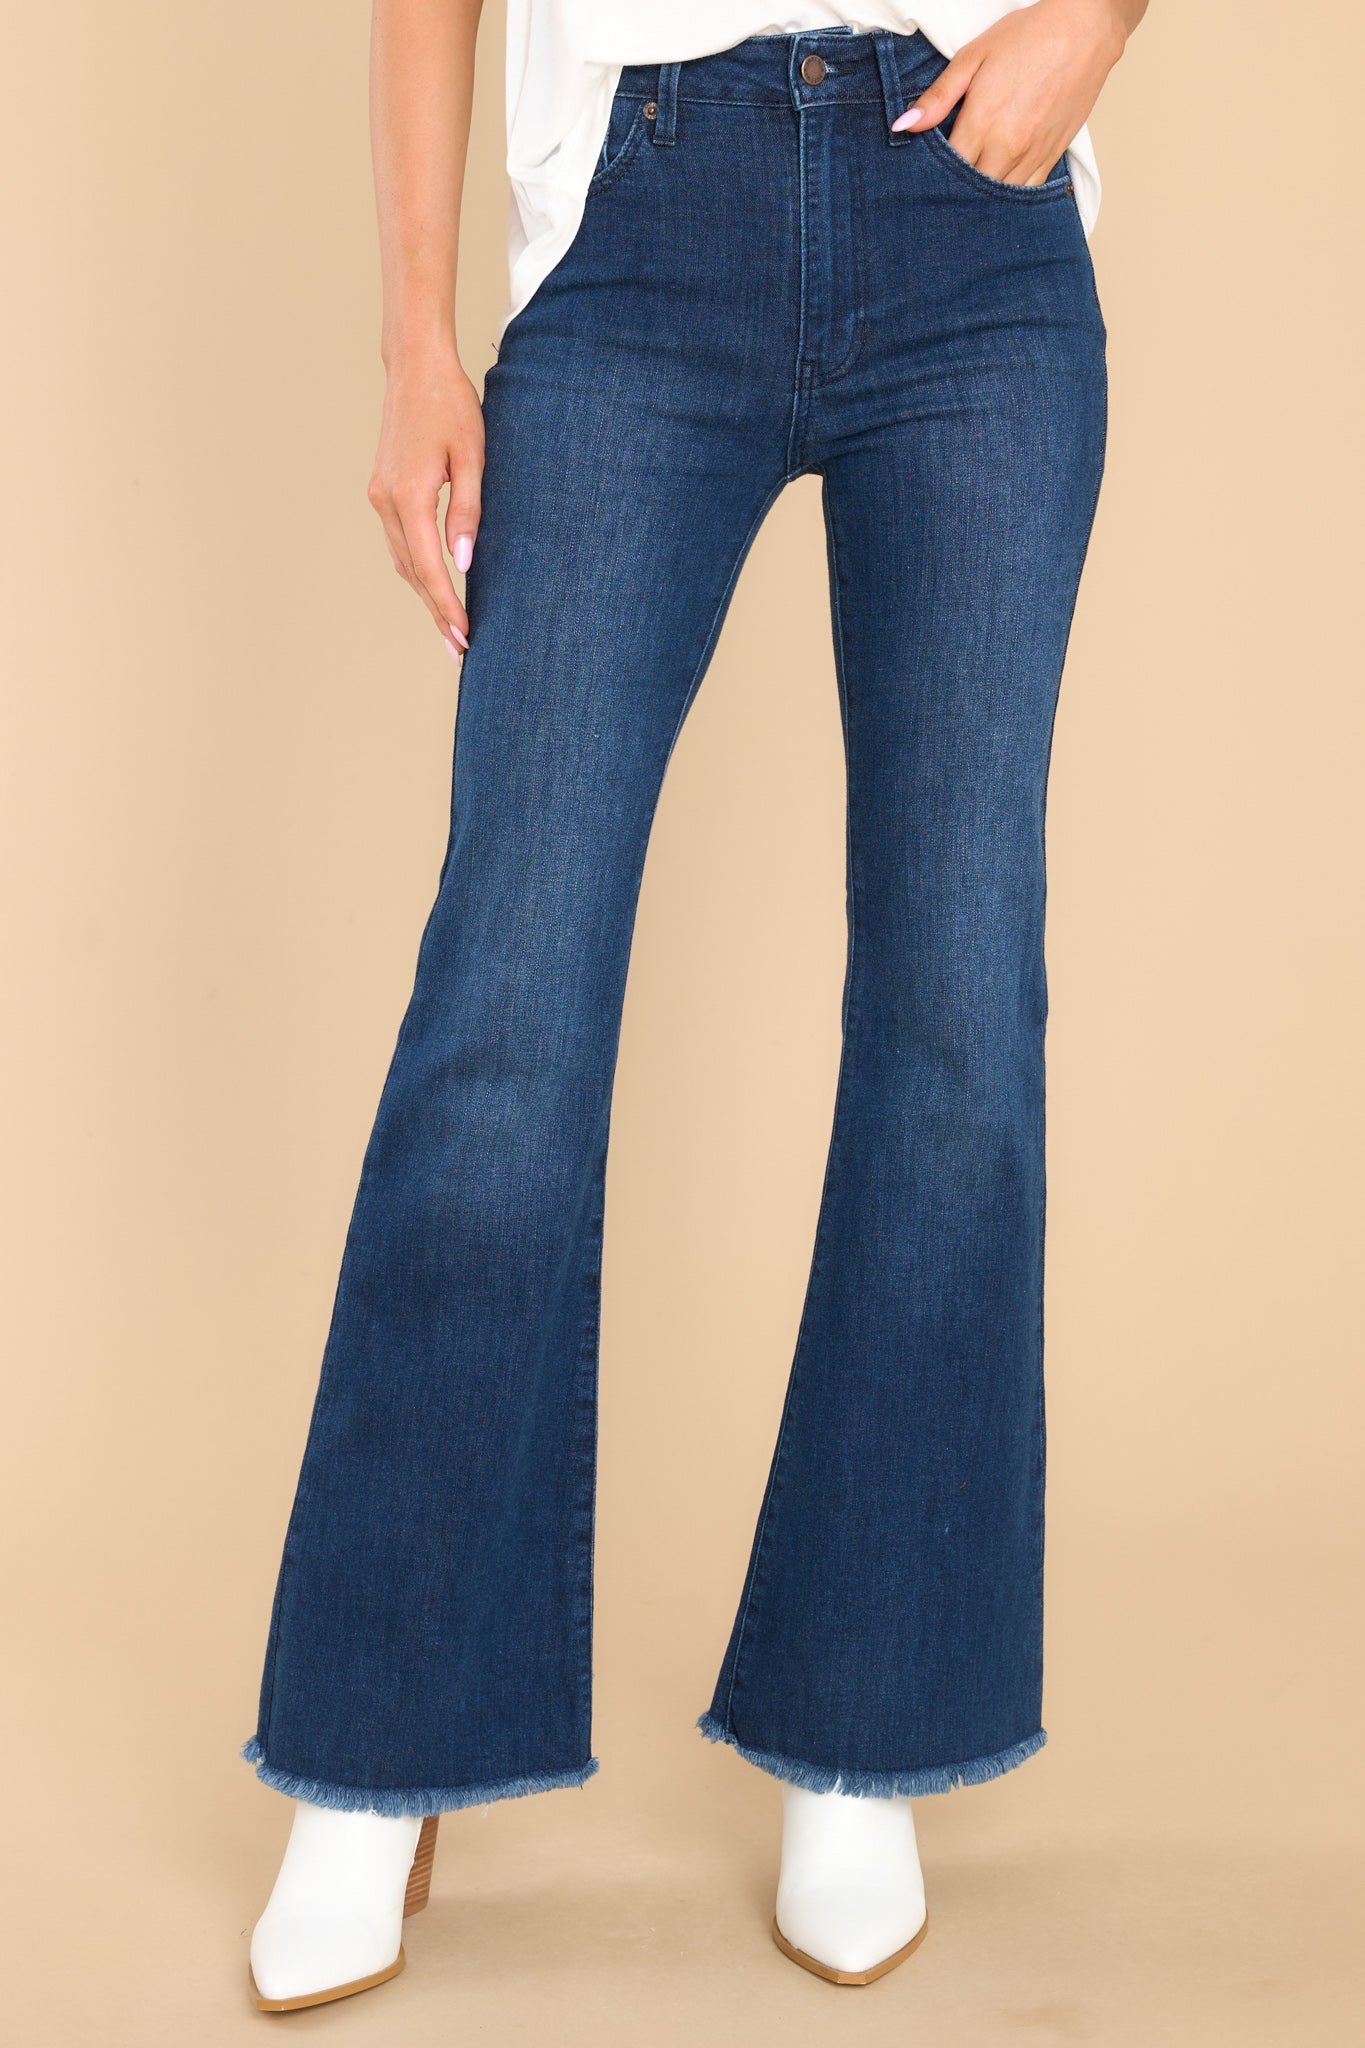 Buy Online|Spykar Women Black Lycra Skinny Fit - Clean Look Mid Rise Jeans -(Adora)